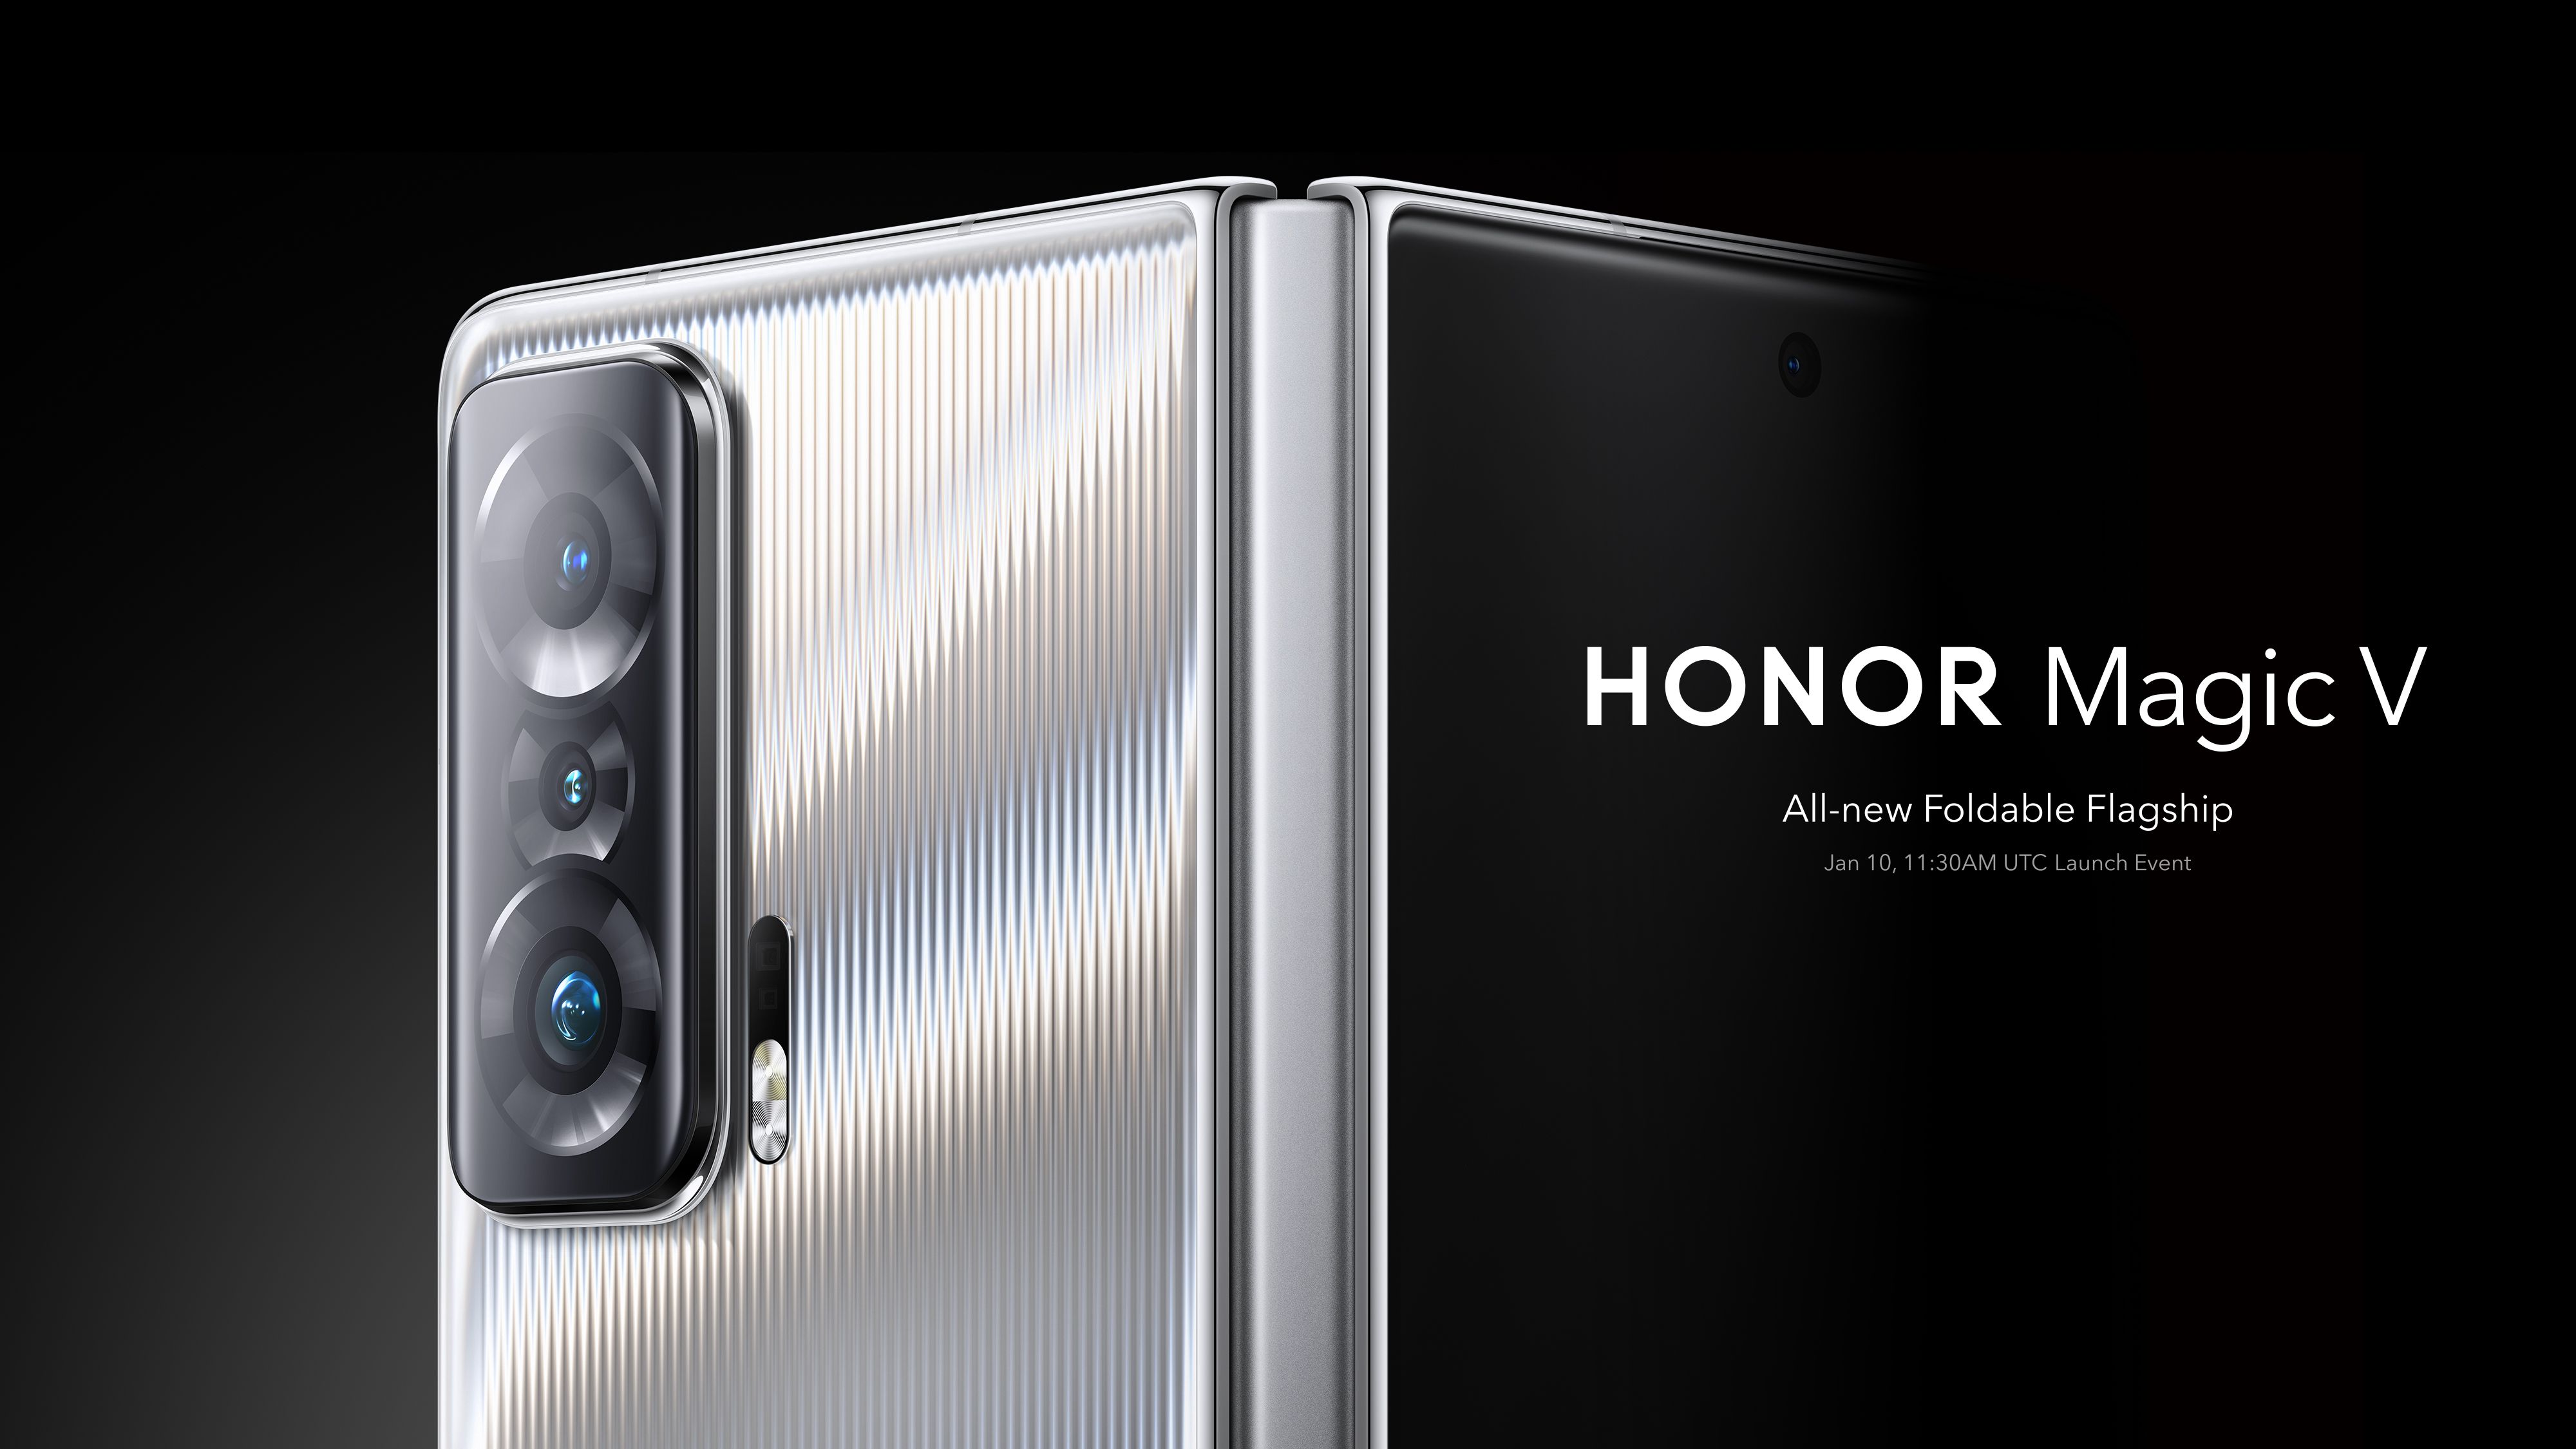 Honor will launch its Magic V folding smartphone on Jan 10